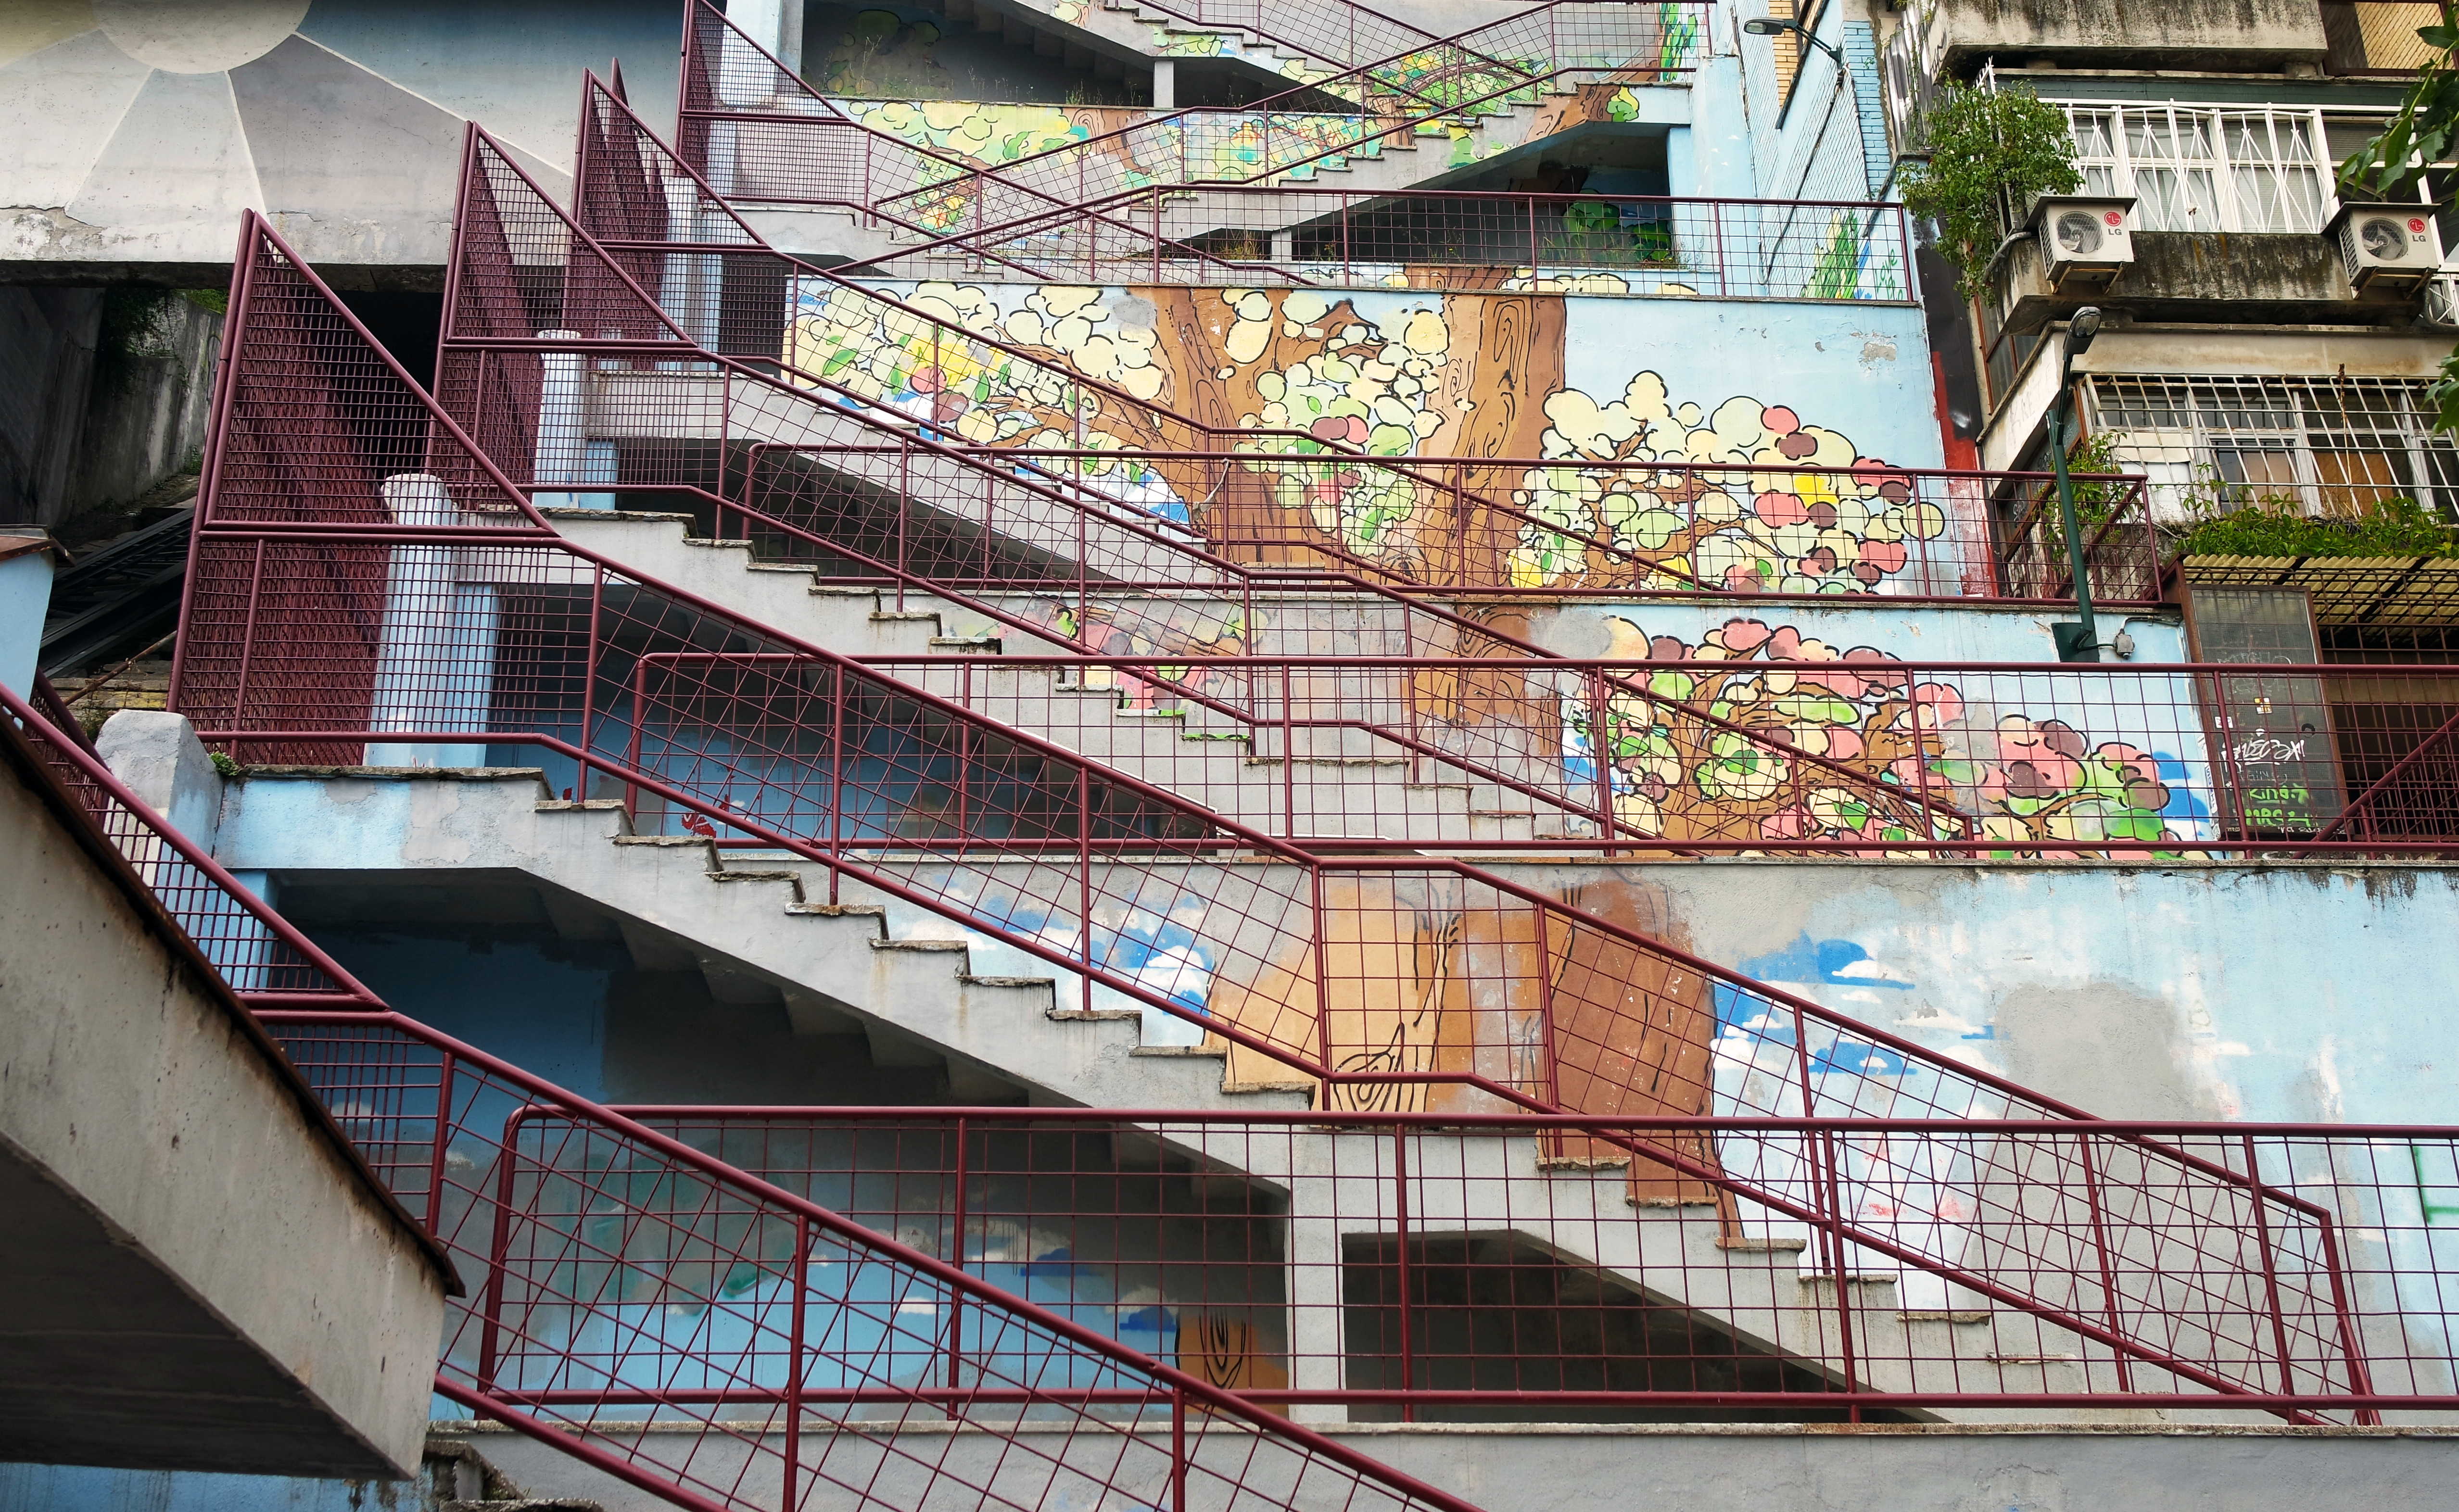 saraevo-street-art